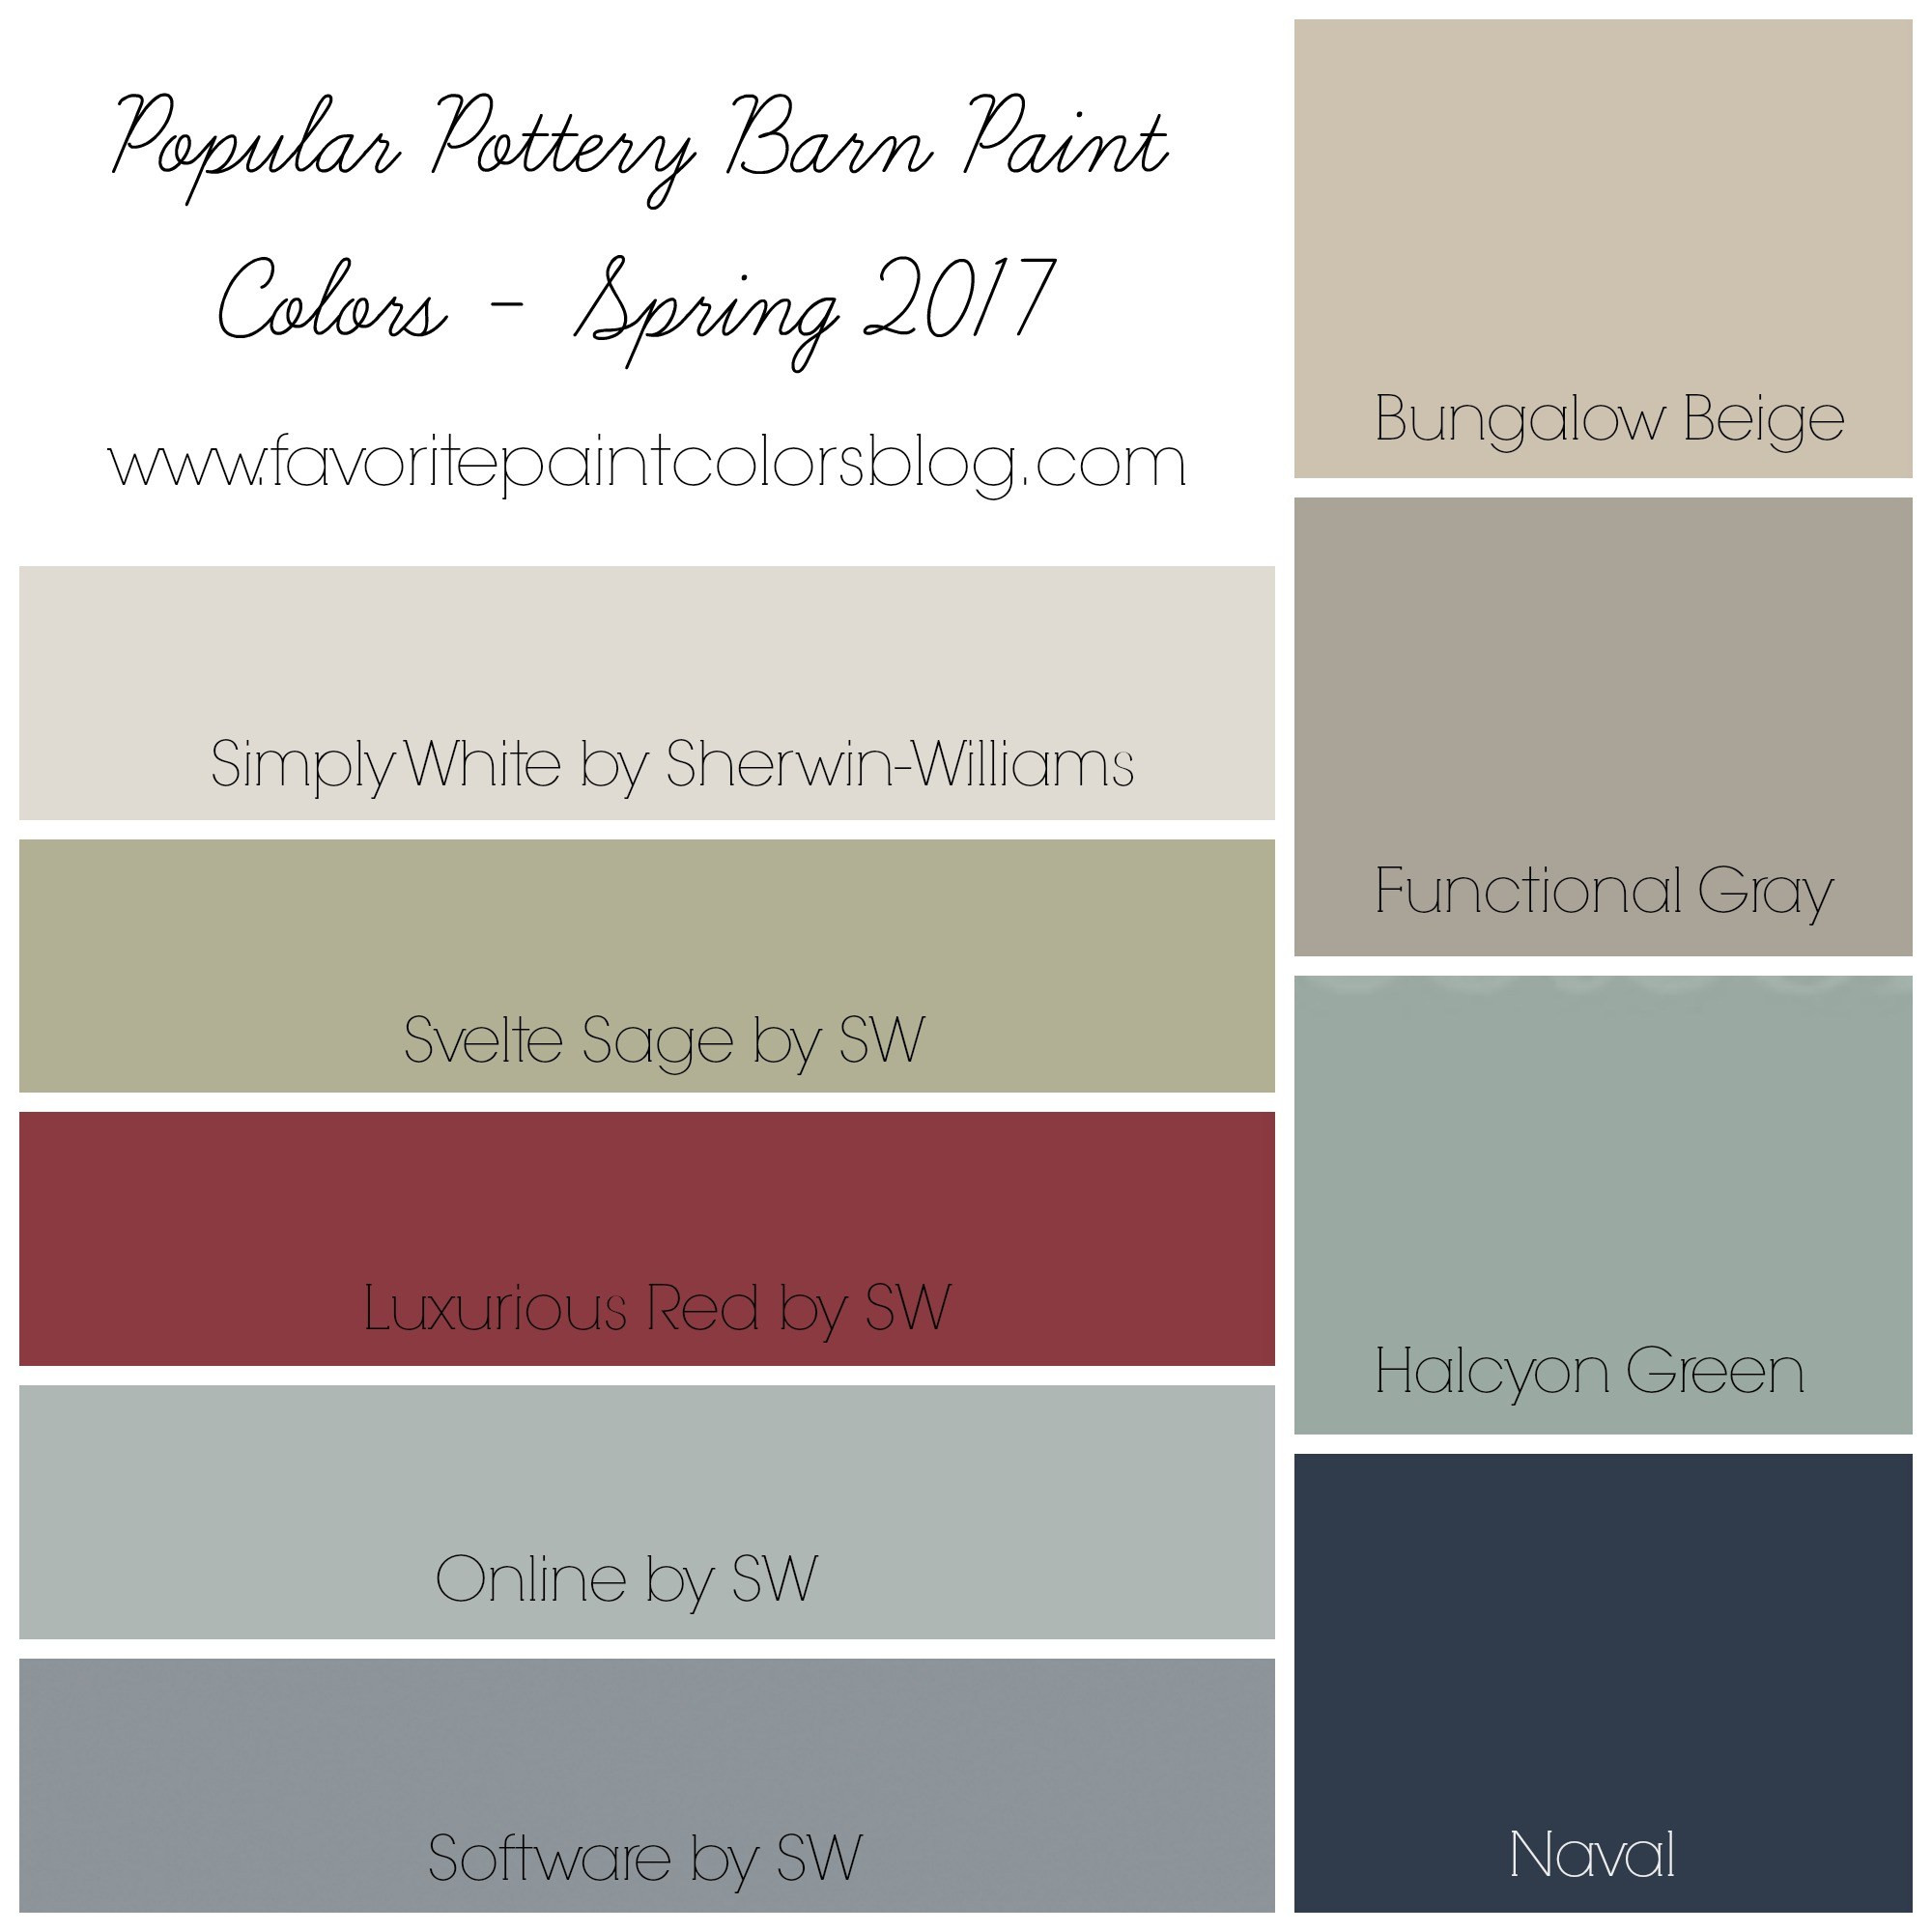 Best ideas about Popular Paint Colors
. Save or Pin Popular Pottery Barn Paint Colors Favorite Paint Colors Blog Now.